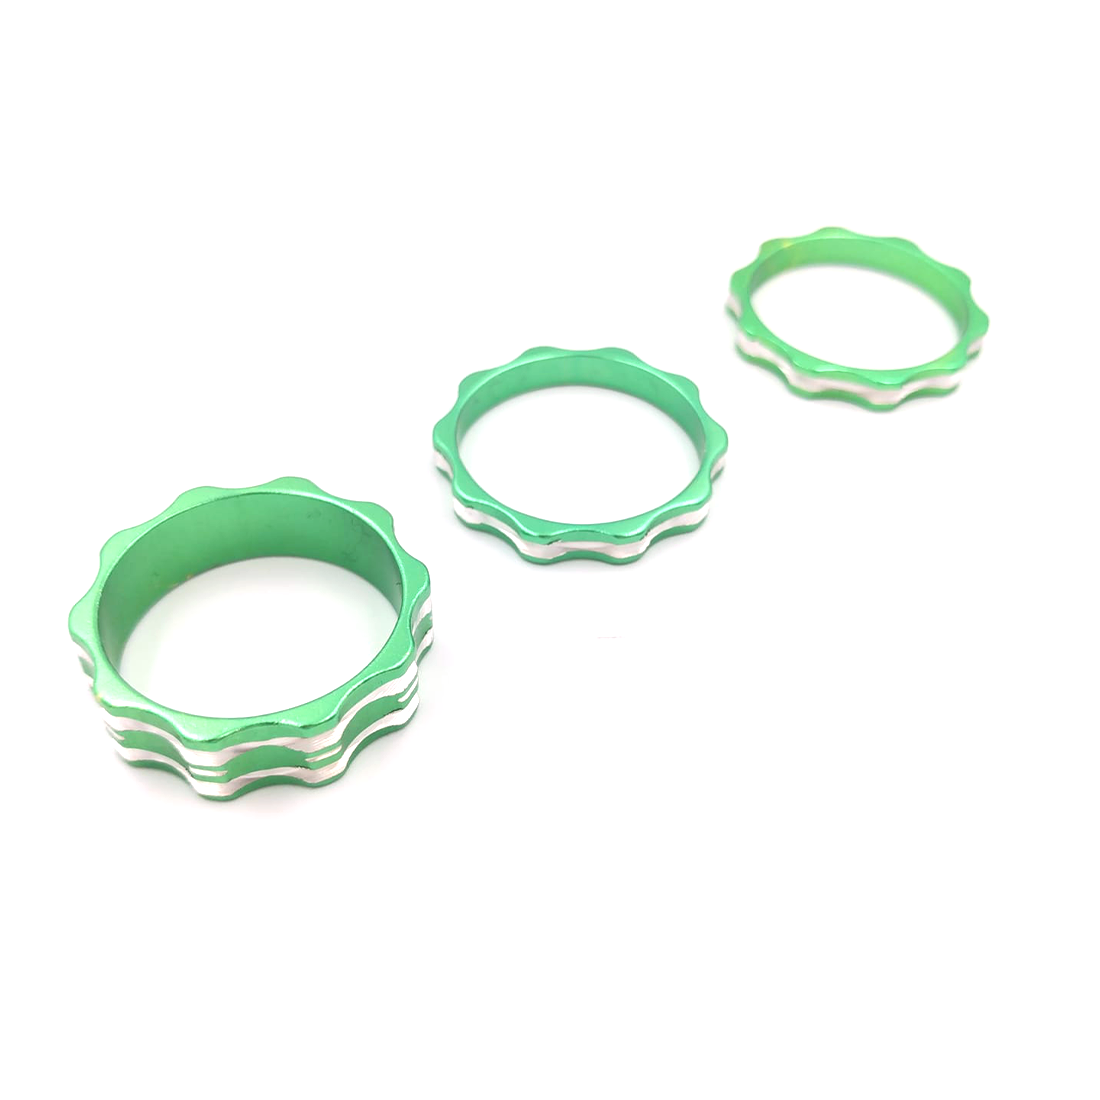 Zoid Çatal Seti Yüzüğü-Spacer Yeşil